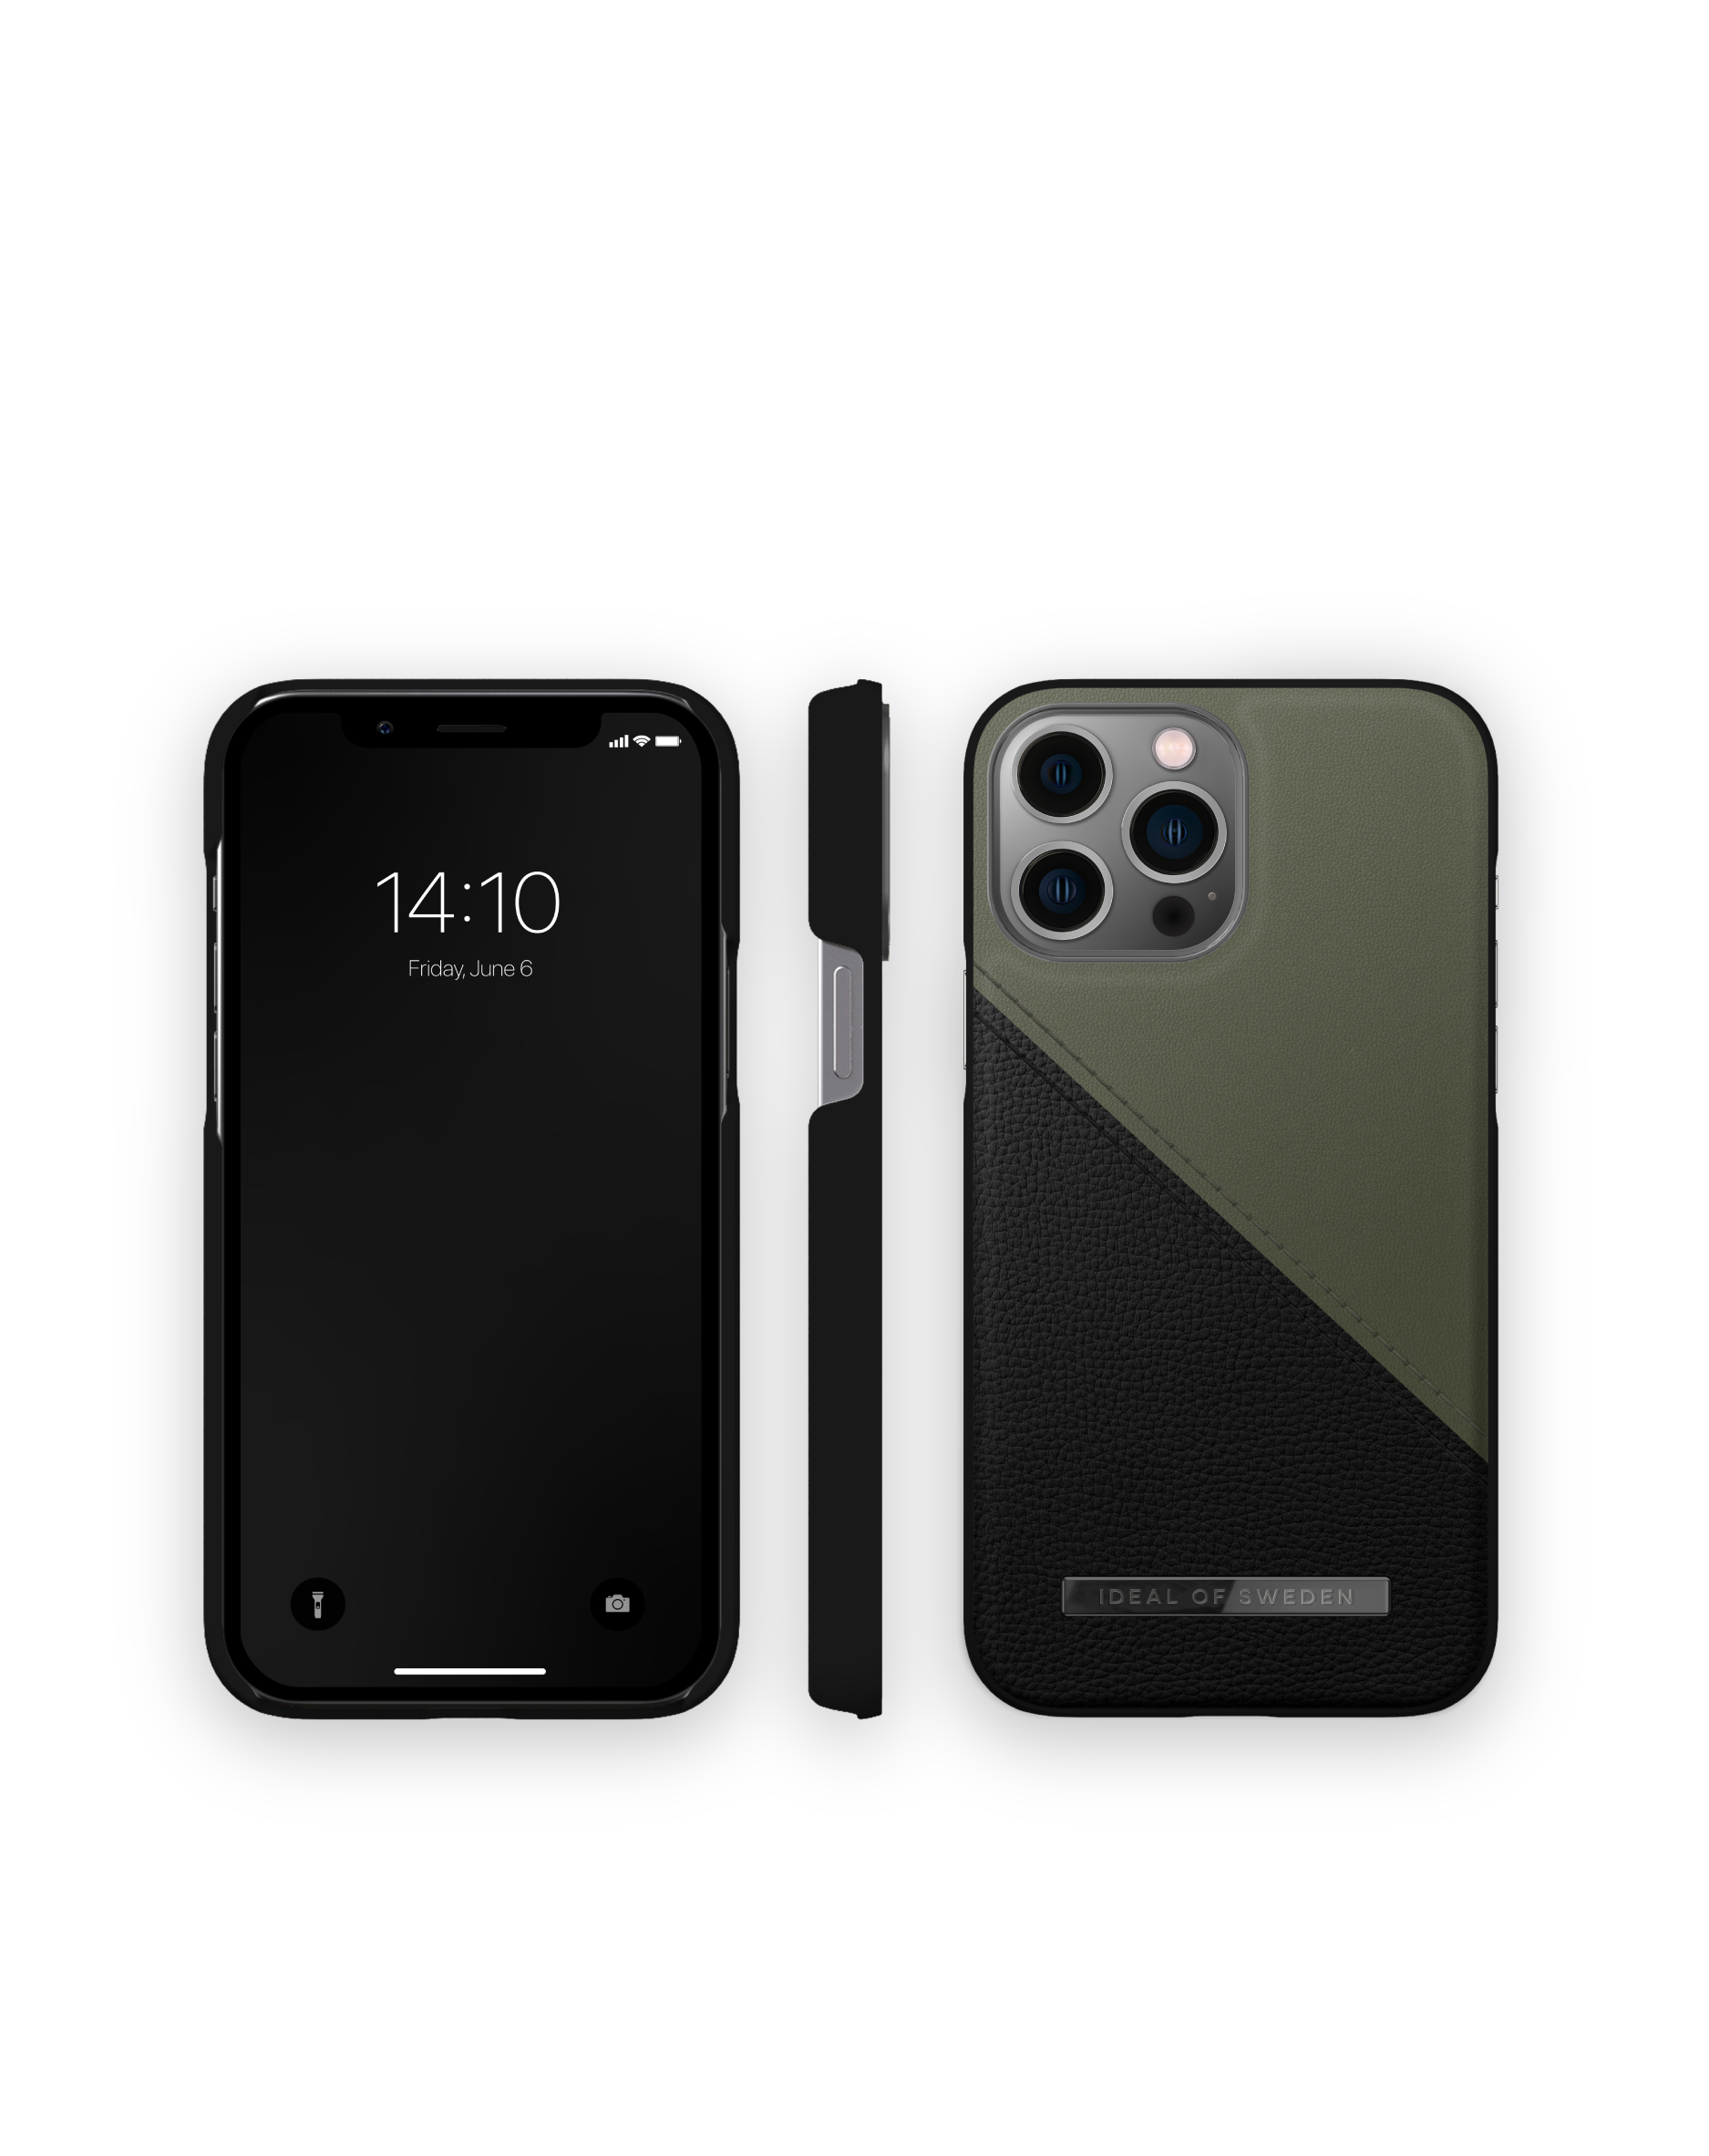 IDEAL OF Backcover, Onyx 13 IDACAW21-I2167-362, SWEDEN Black Max, Pro iPhone Khaki Apple